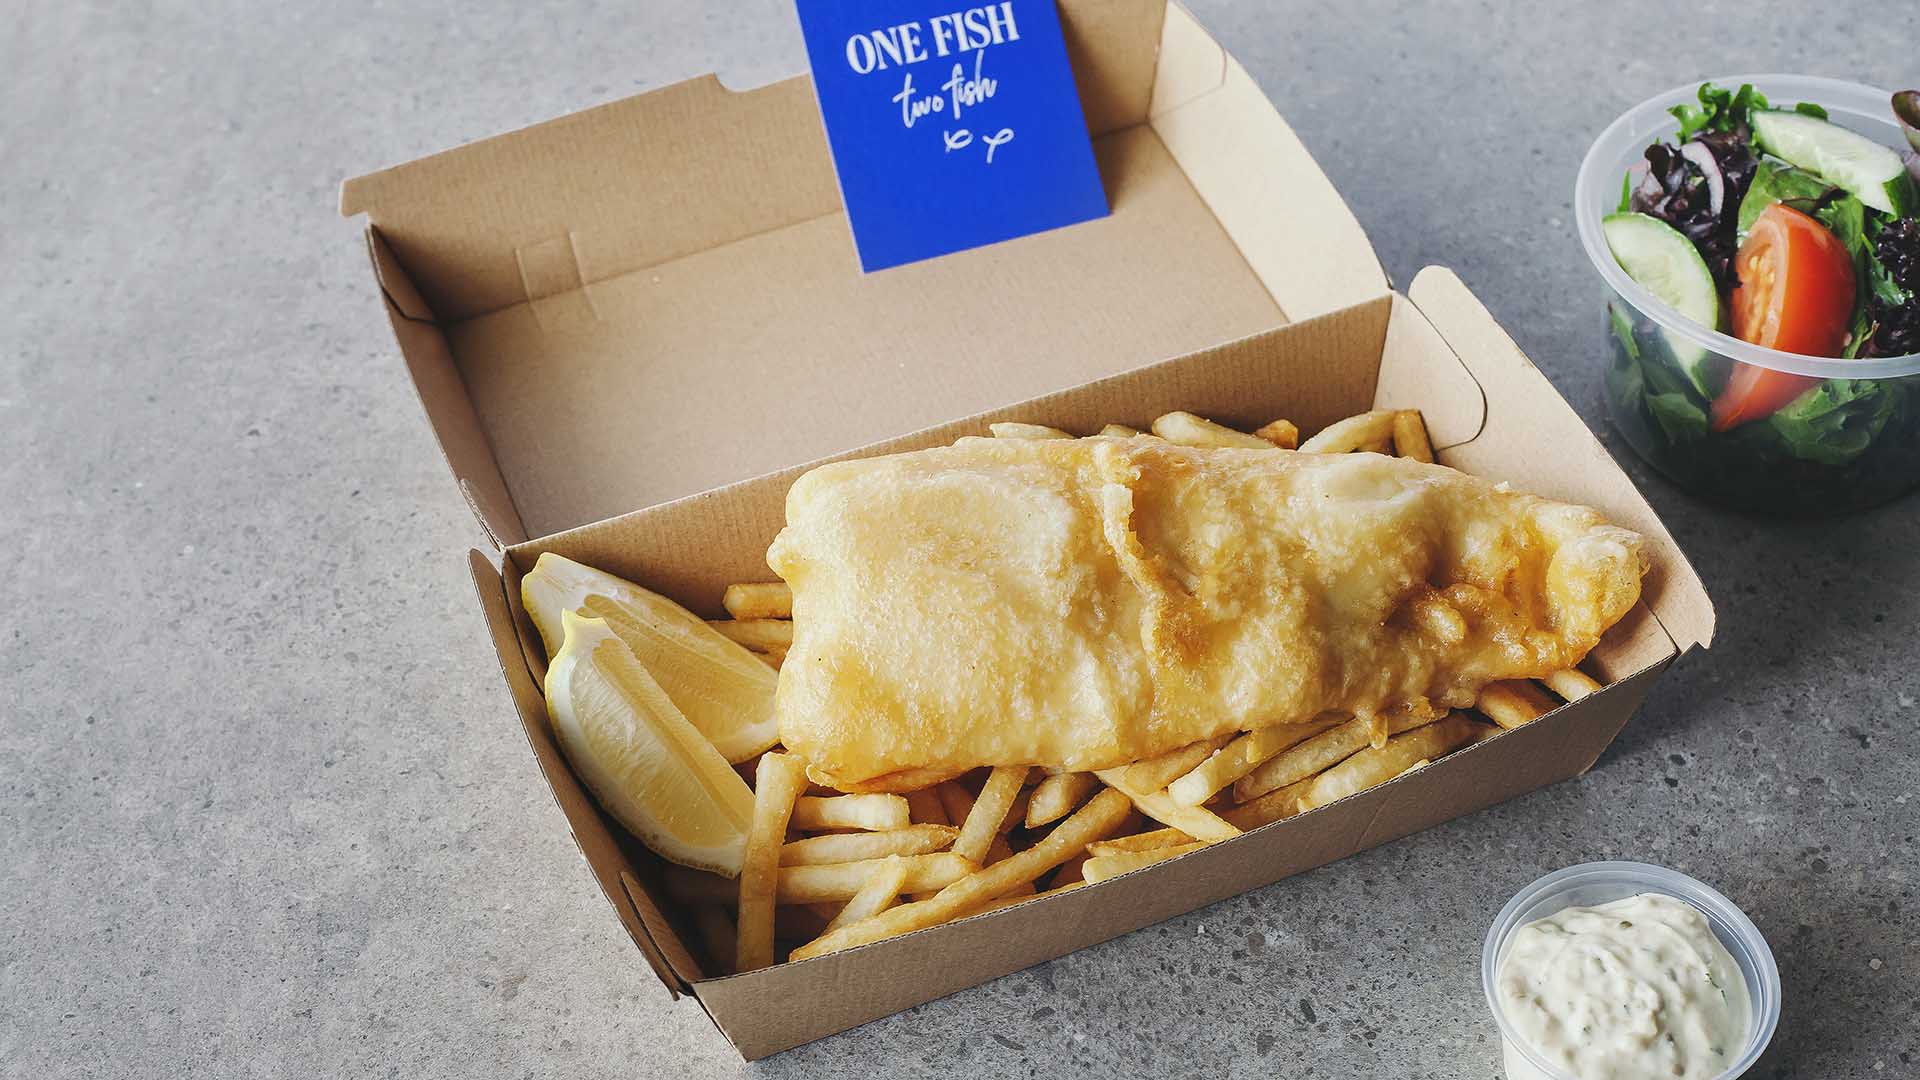 World Fish 'n' Chip Day 2020